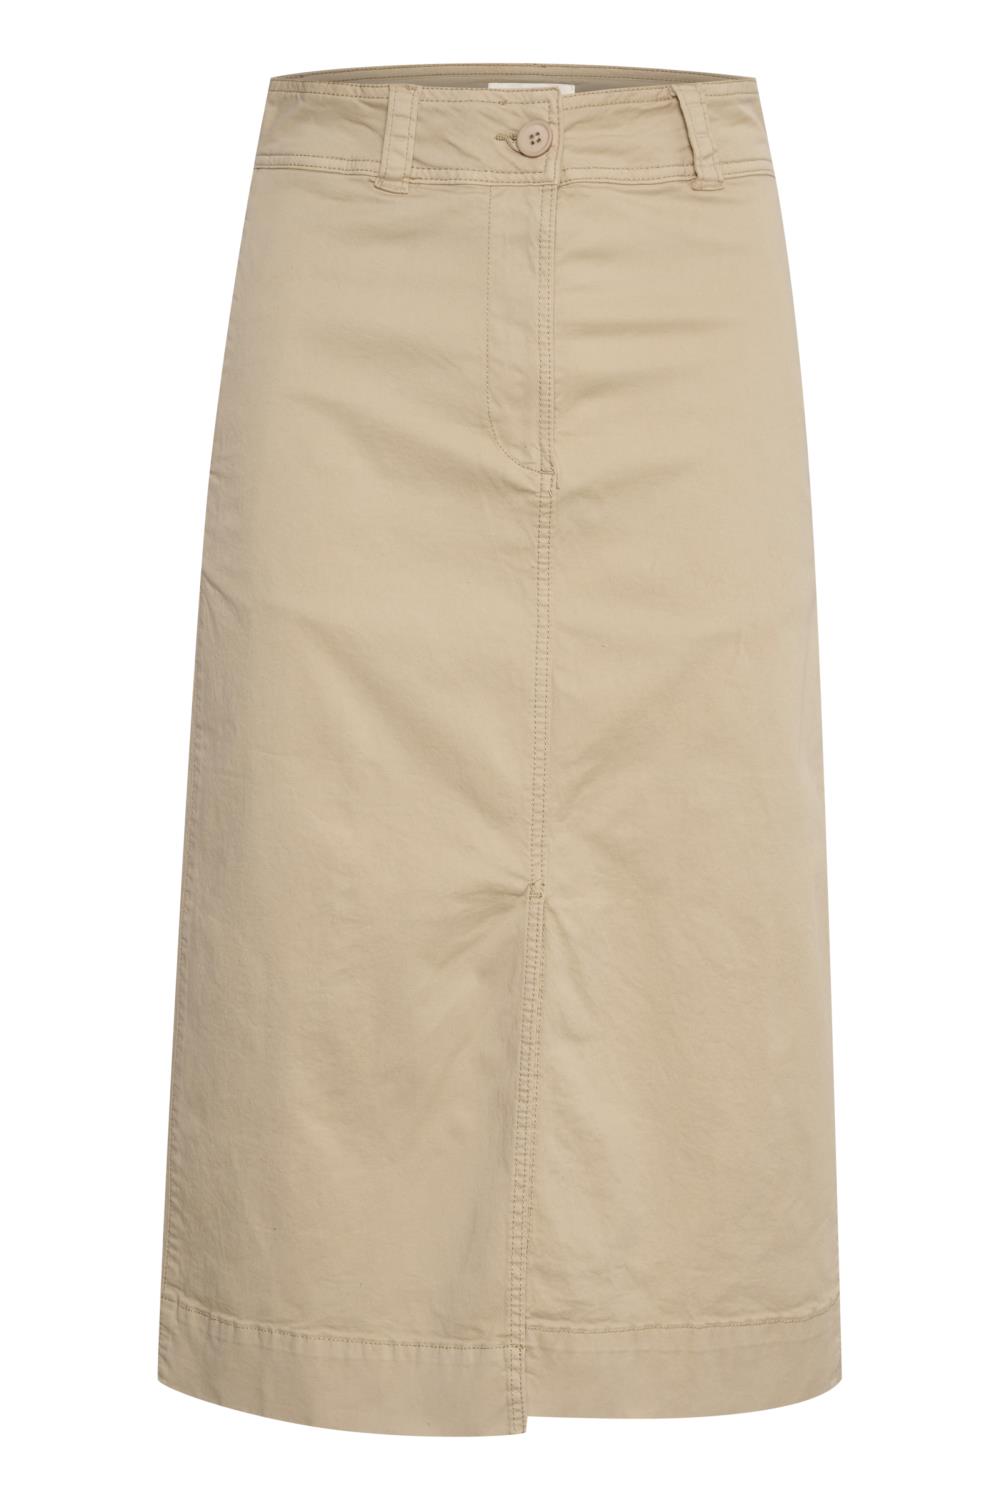 Part Two Fannies Skirt, beige